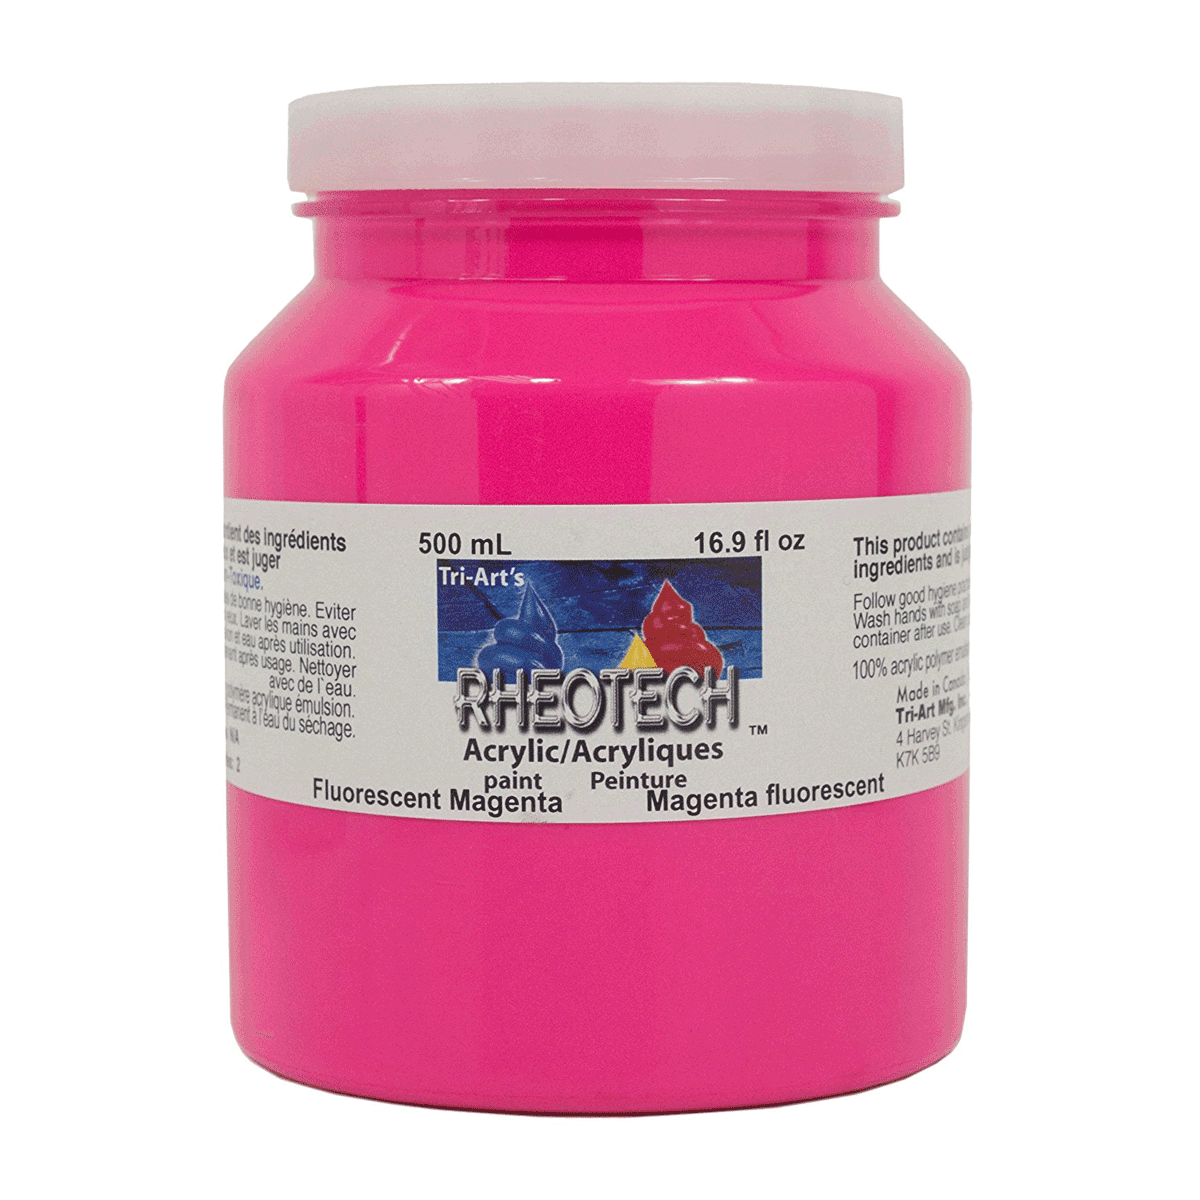 Rheotech Acrylic Fluorescent Magenta 500 ml Jar